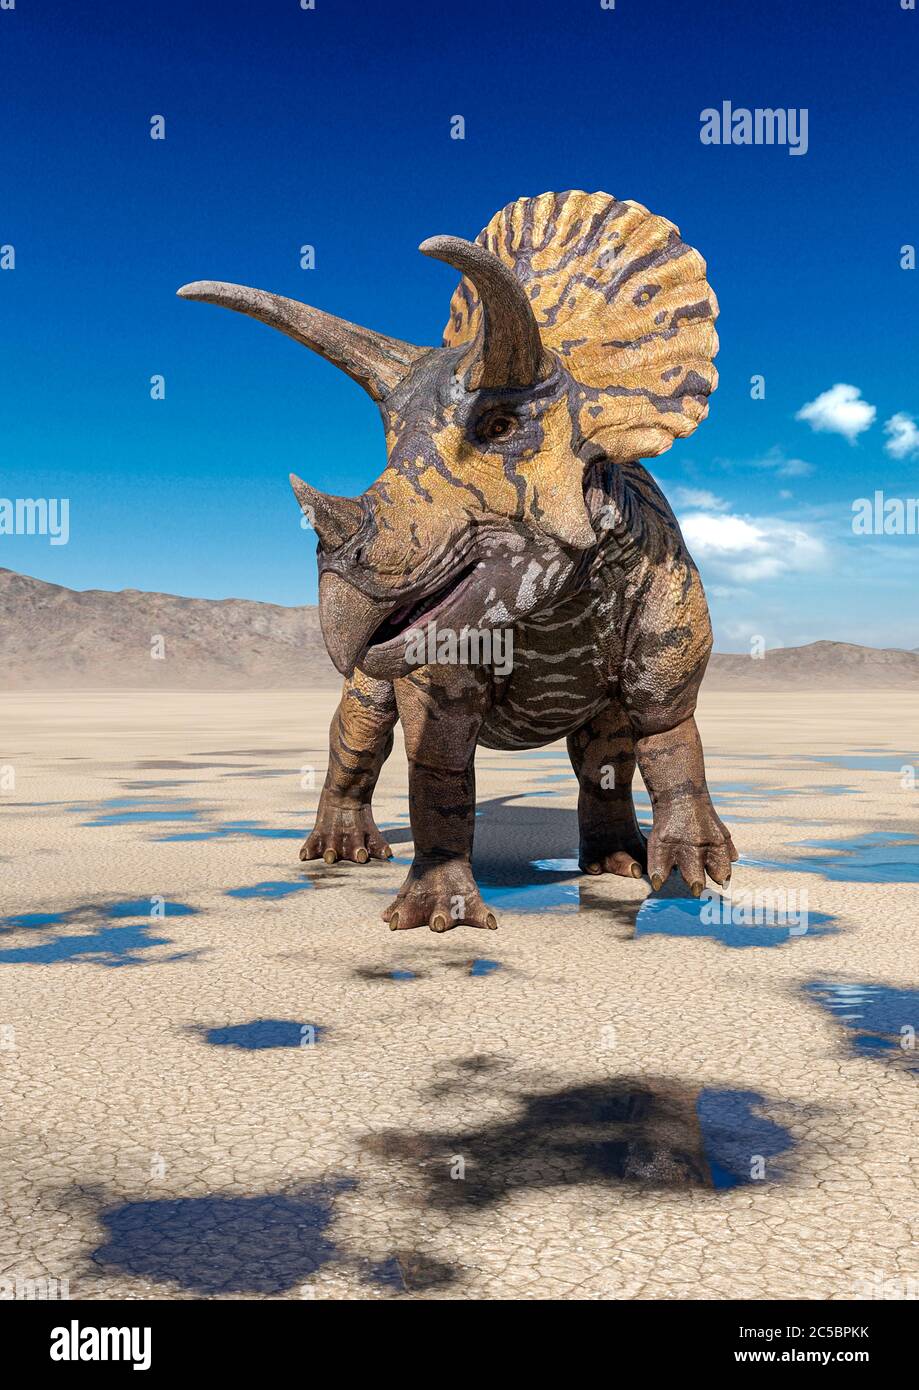 triceratops on the desert walking after rain, 3d illustration Stock Photo